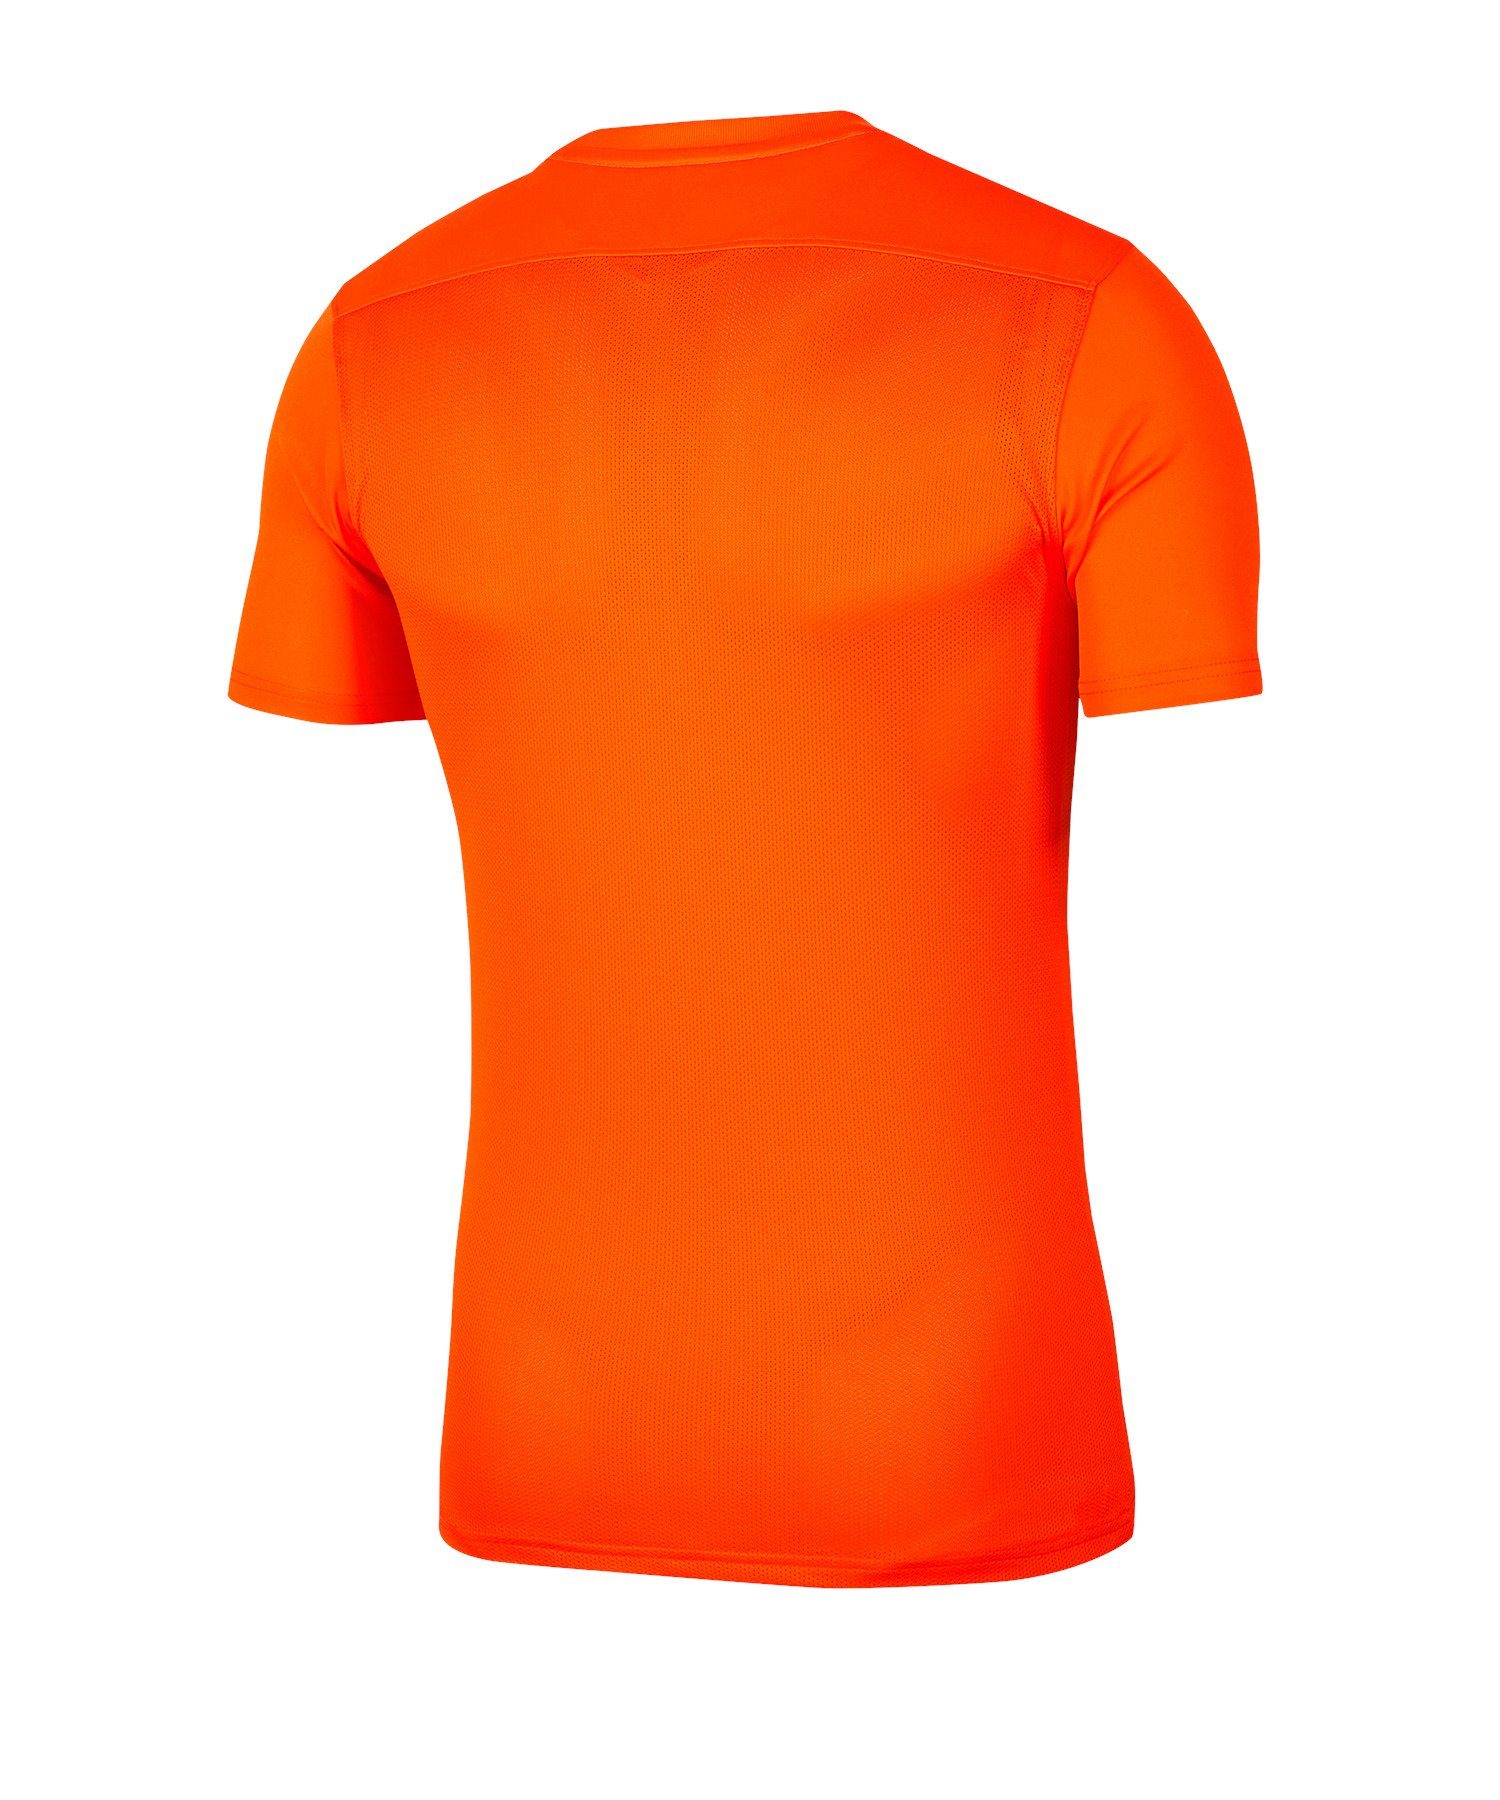 Nike Fußballtrikot Park VII Trikot kurzarm orangeschwarz